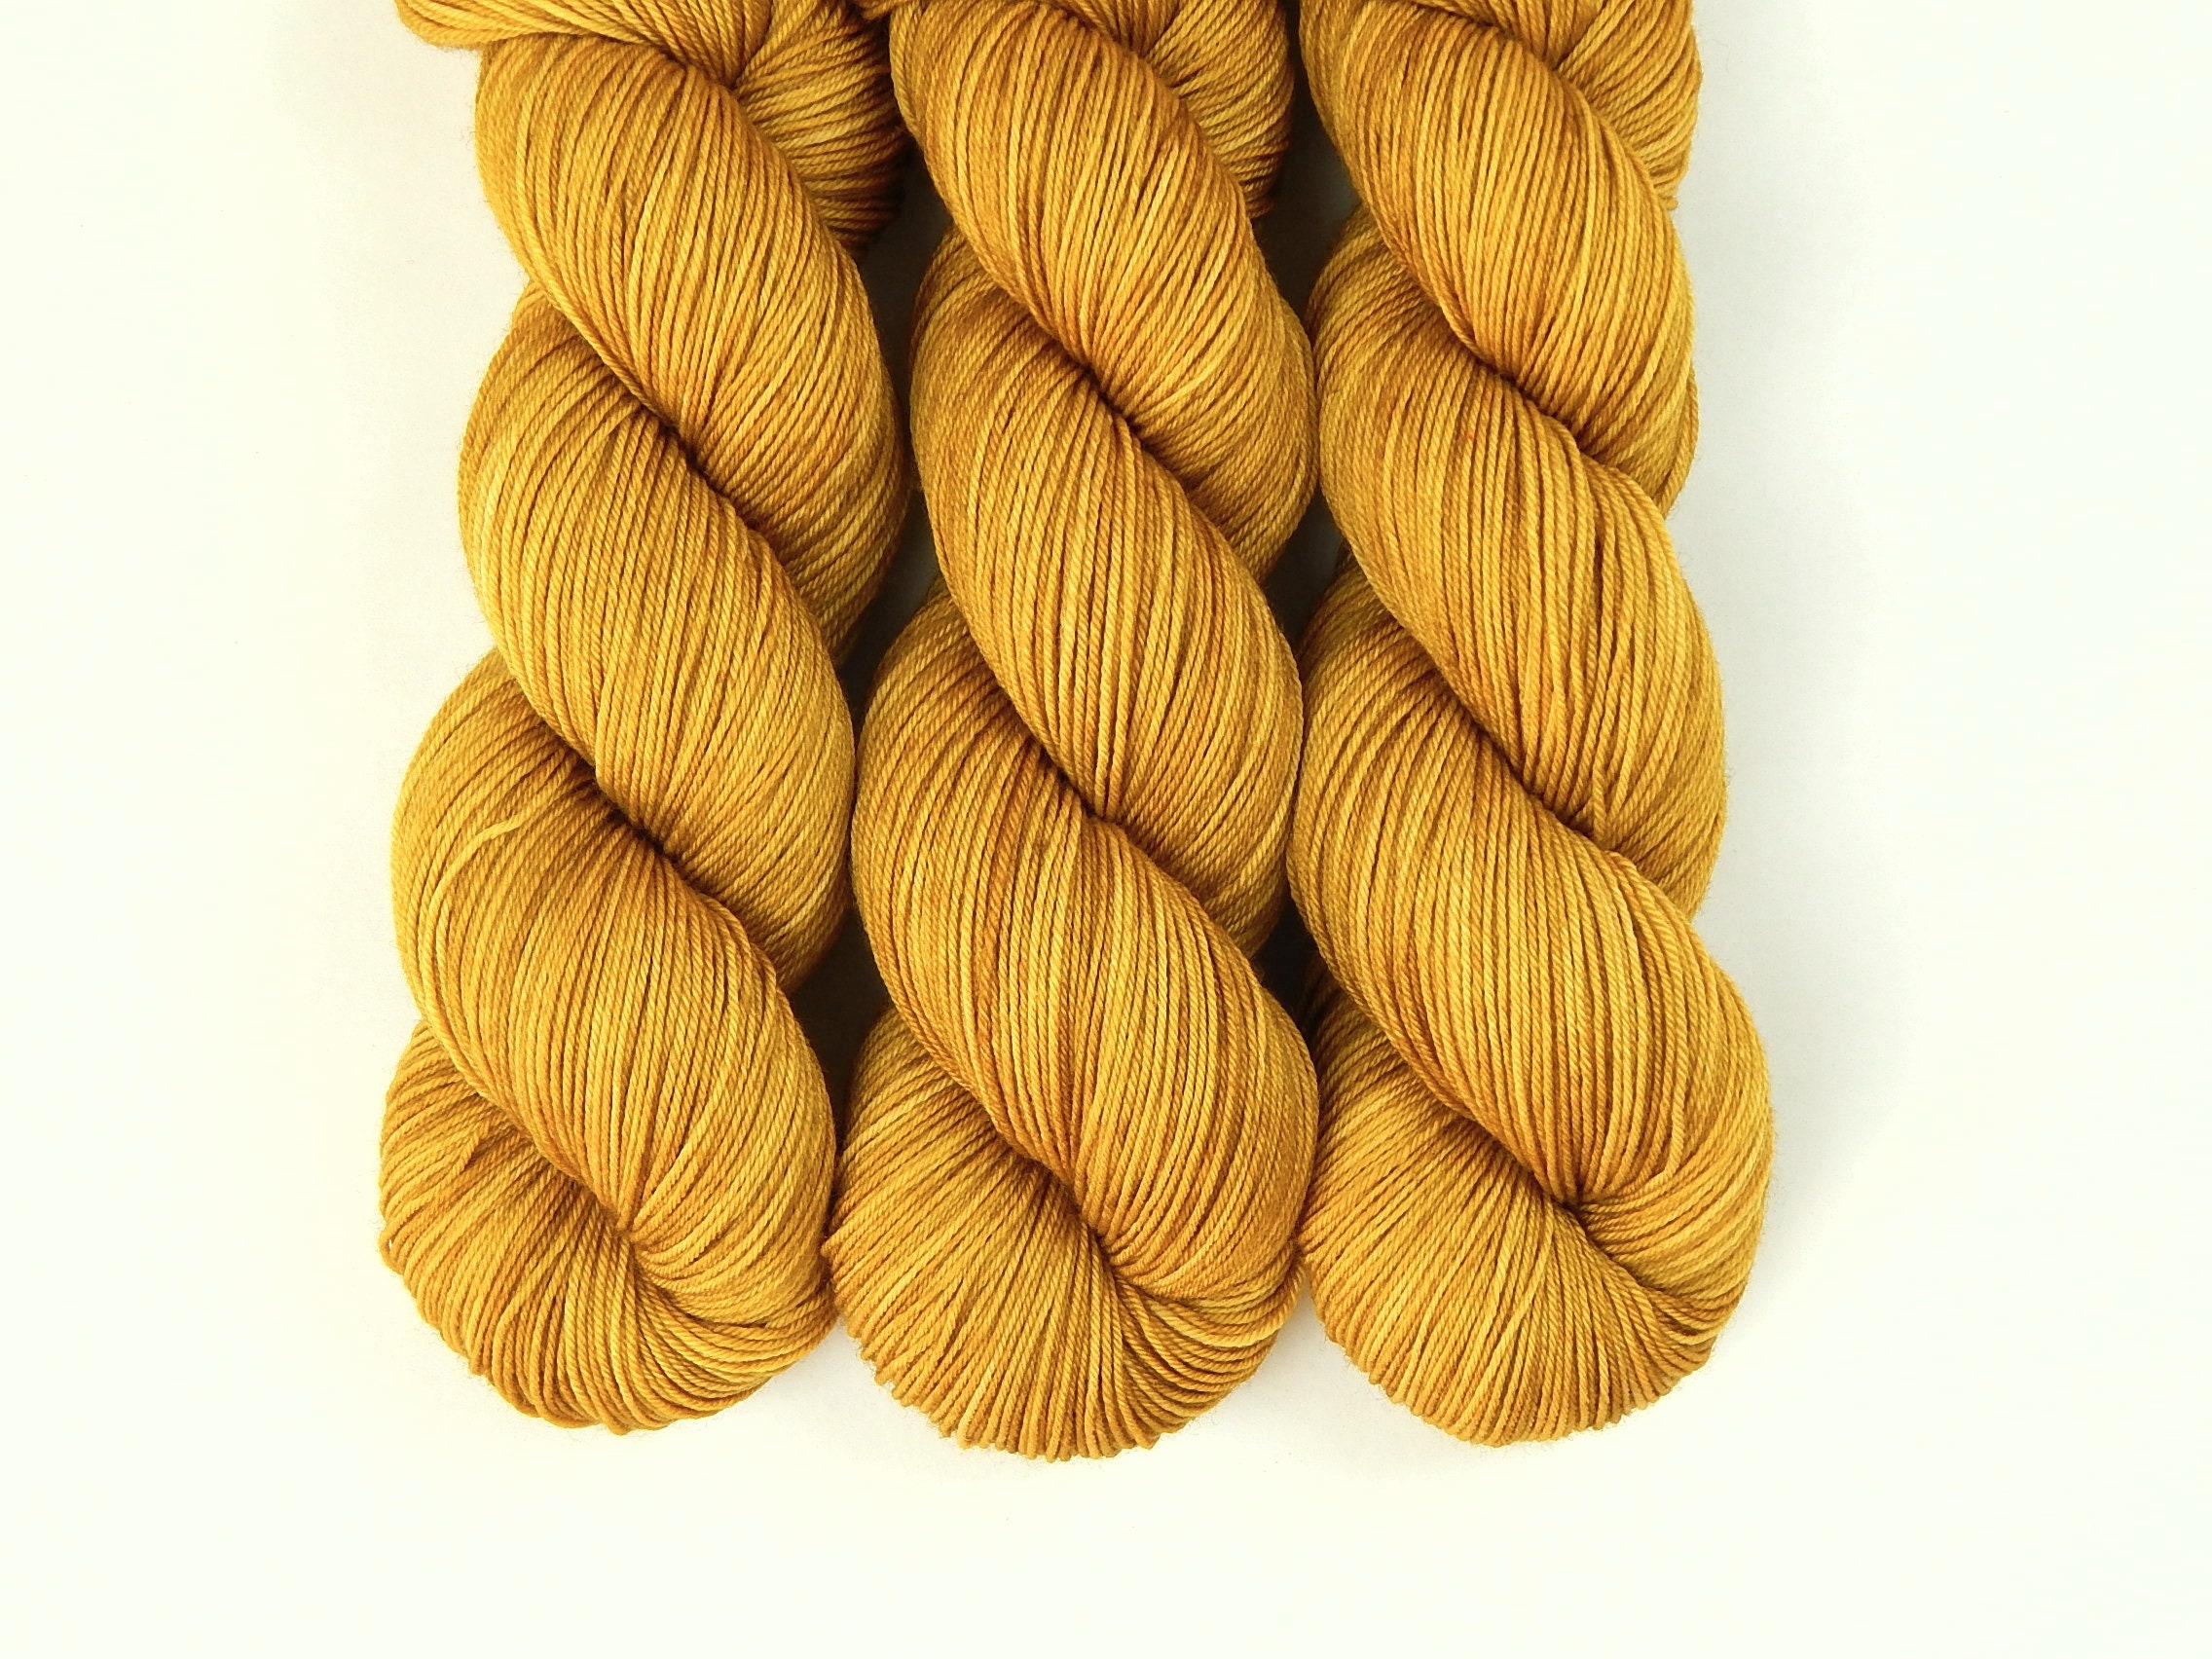 Bright Gold Lurex Yarn, Sparkle Metallic Yarn, Yellow Gold Soft Ribbon  Yarn, Knitting, Crochet or Wall Hanging Projects, Shining Yarn 